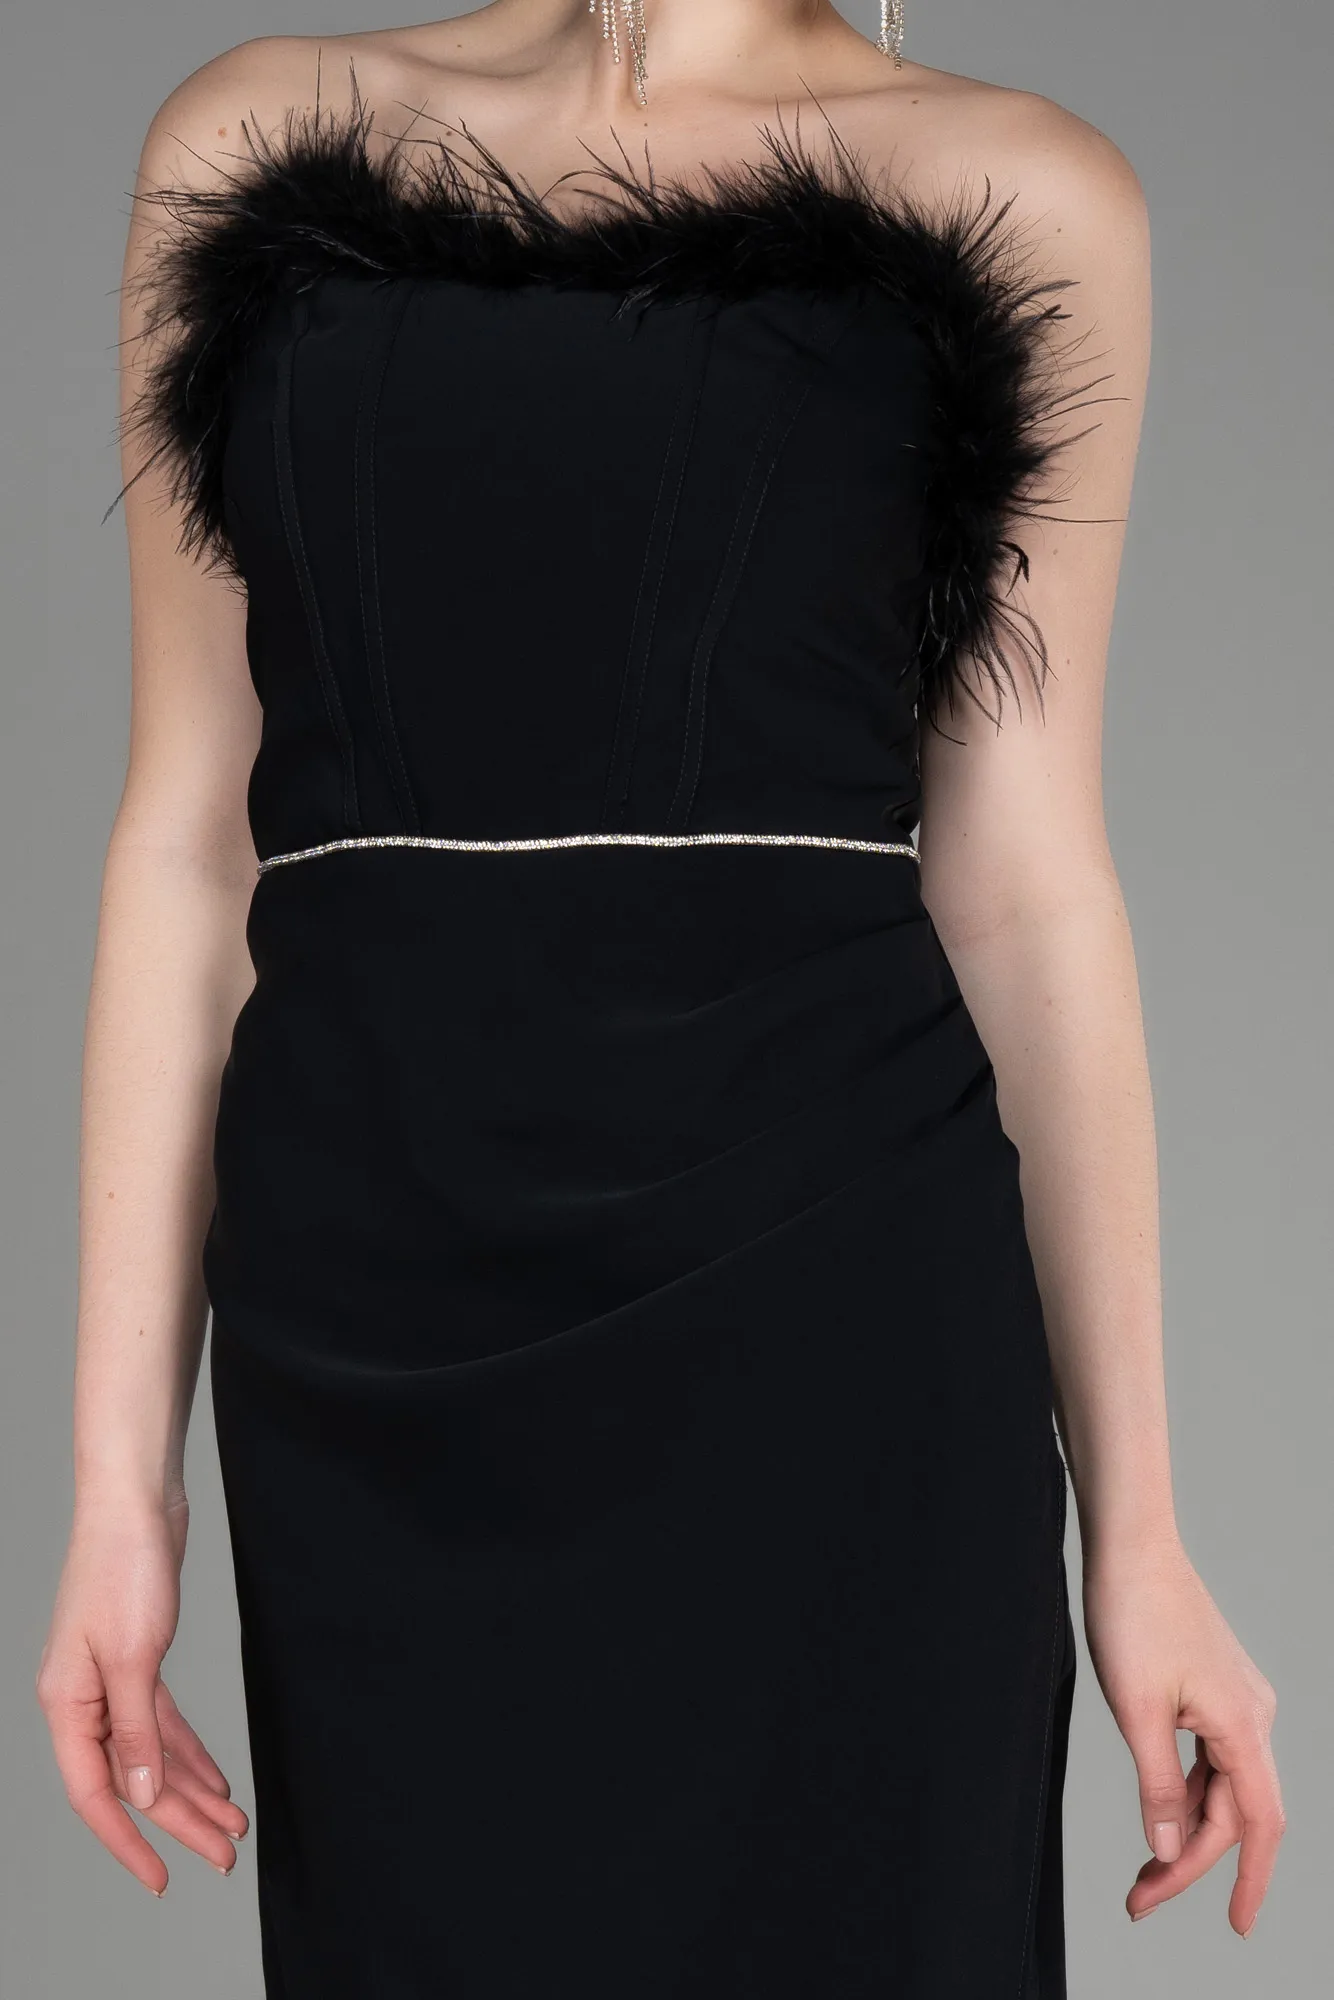 Black-Strapless Long Evening Dress ABU3830